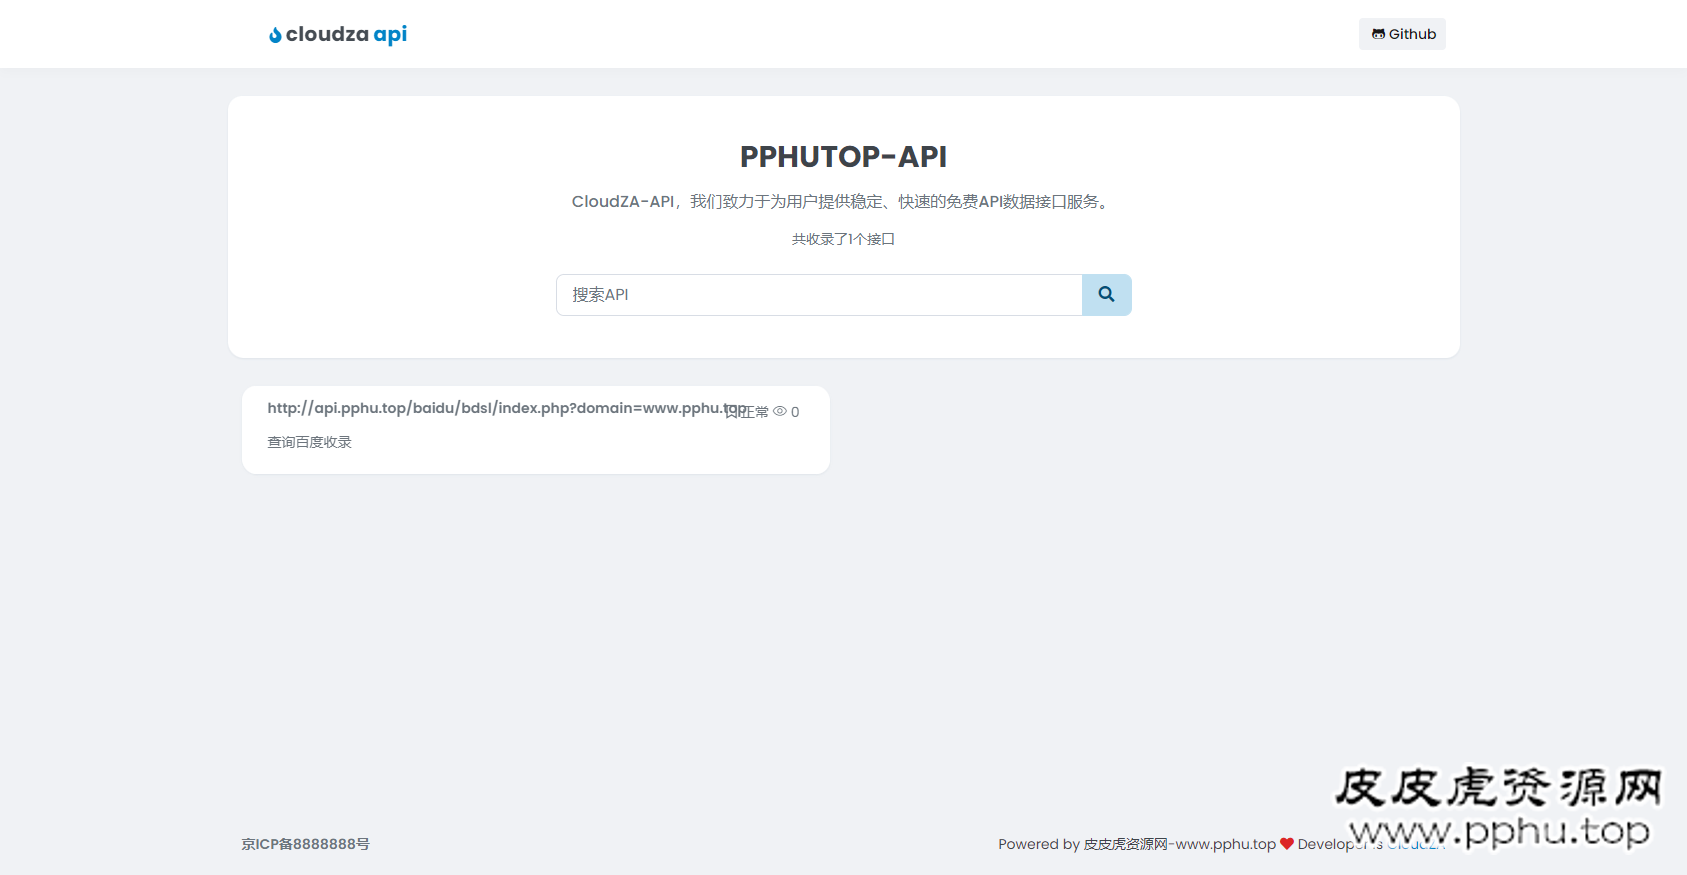 CloudZA-API 一款开源的API内容管理系统 - 内附教程-皮皮虎资源网